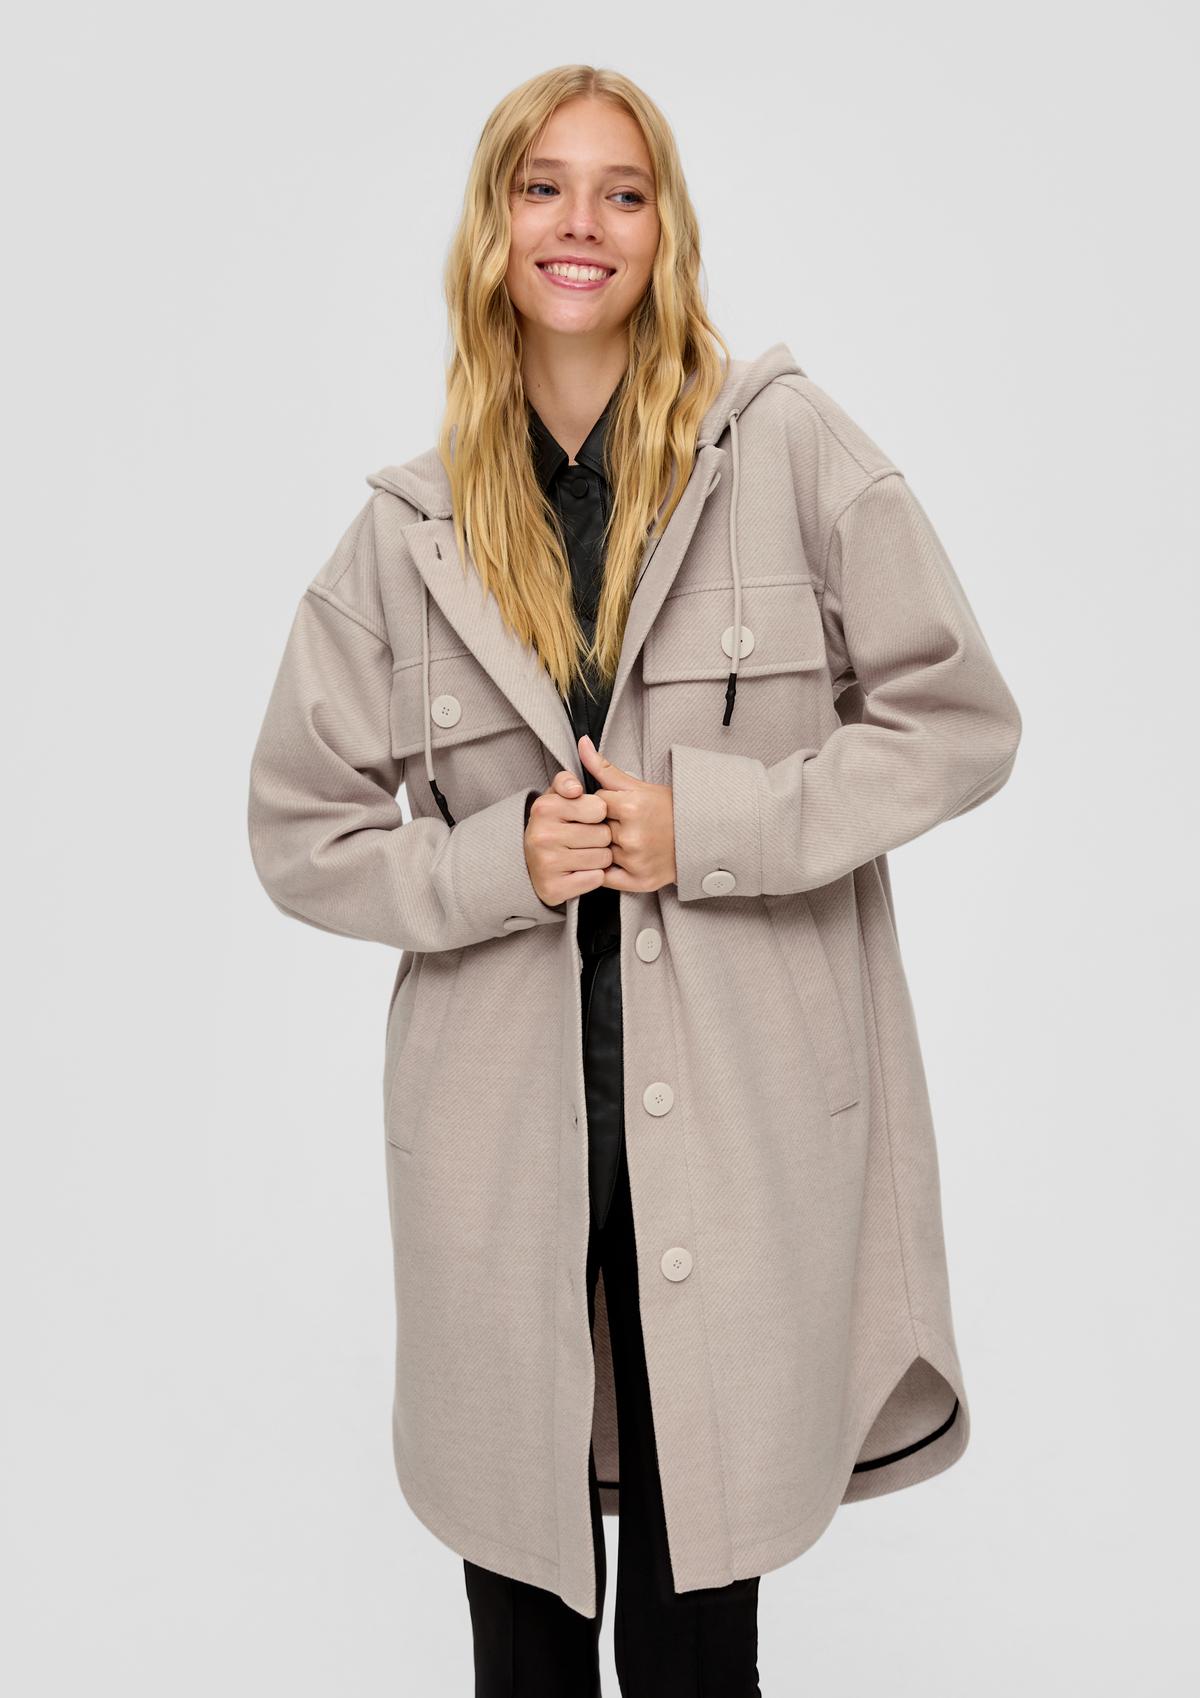 SALE: Jackets & Coats for Women